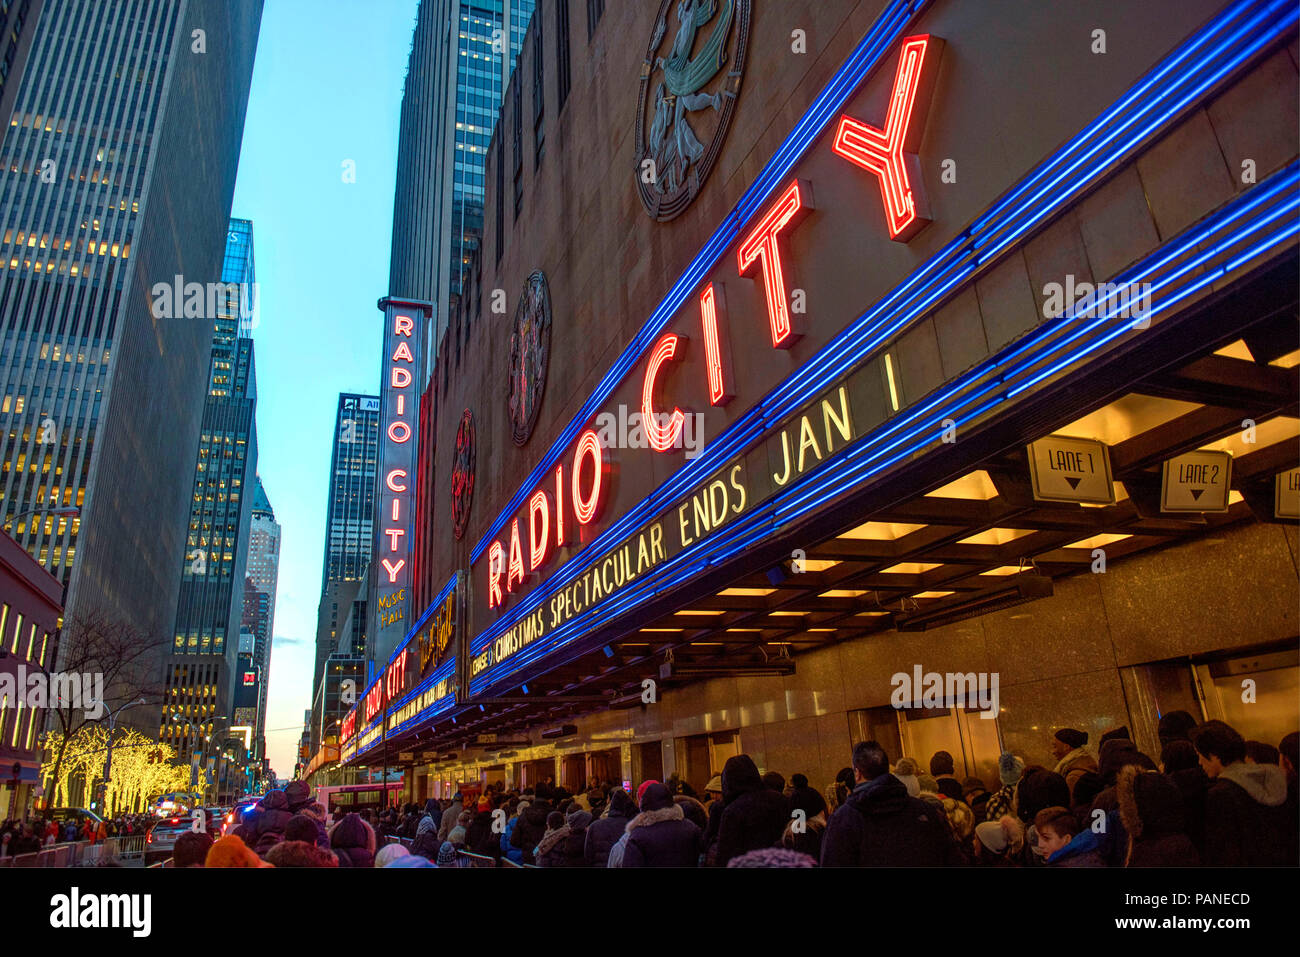 La façade de la Radio City Music Hall, Manhattan, New York City, USA, 29 Décembre 2017 Photo © Fabio Mazzarella/Sintesi/Alamy Stock Photo Banque D'Images